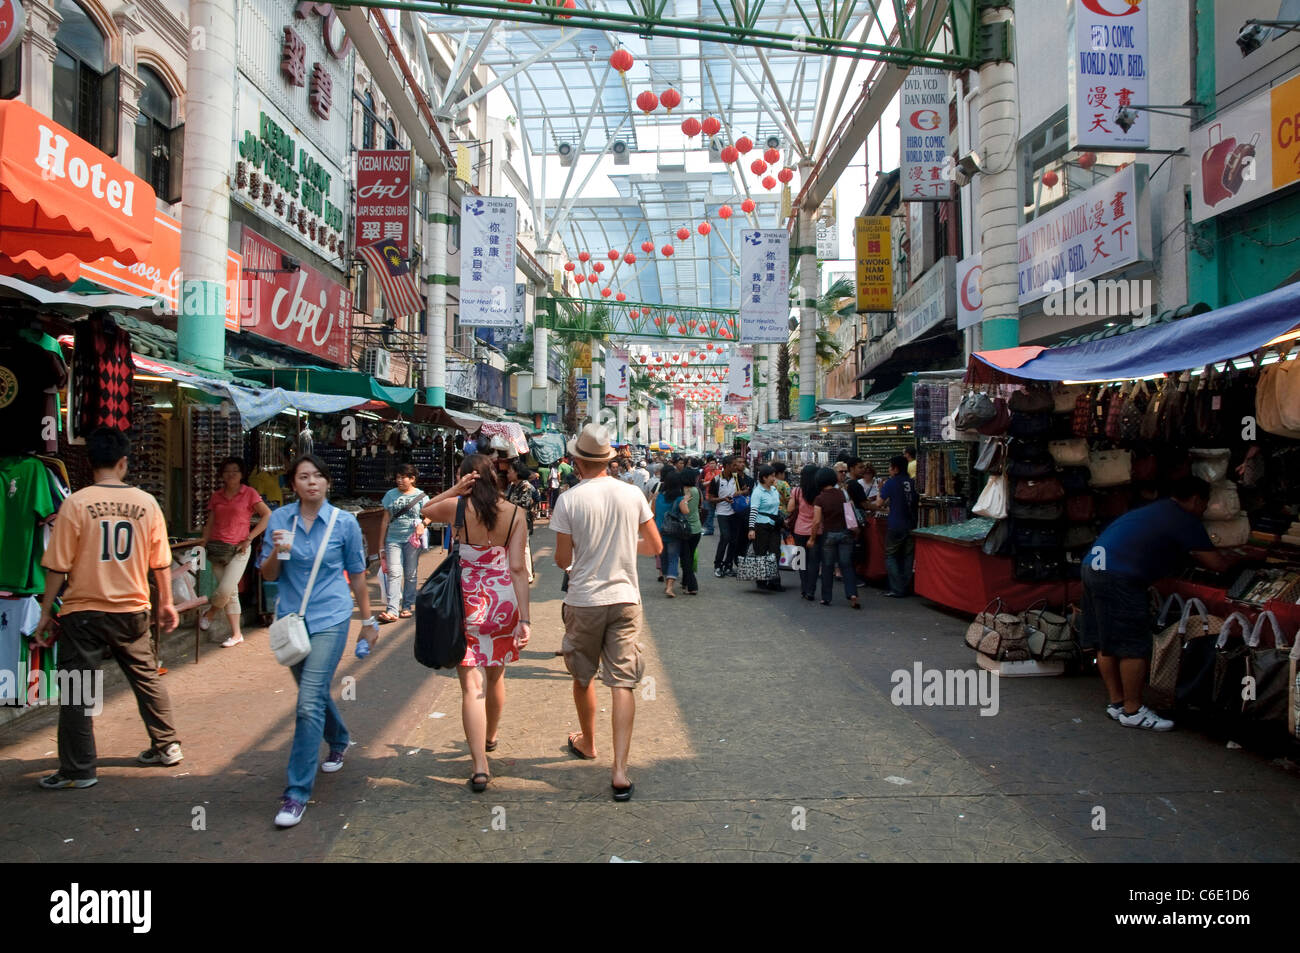 Petaling Street, best known shopping street in Chinatown, Kuala Lumpur, Malaysia, Southeast Asia, Asia Stock Photo